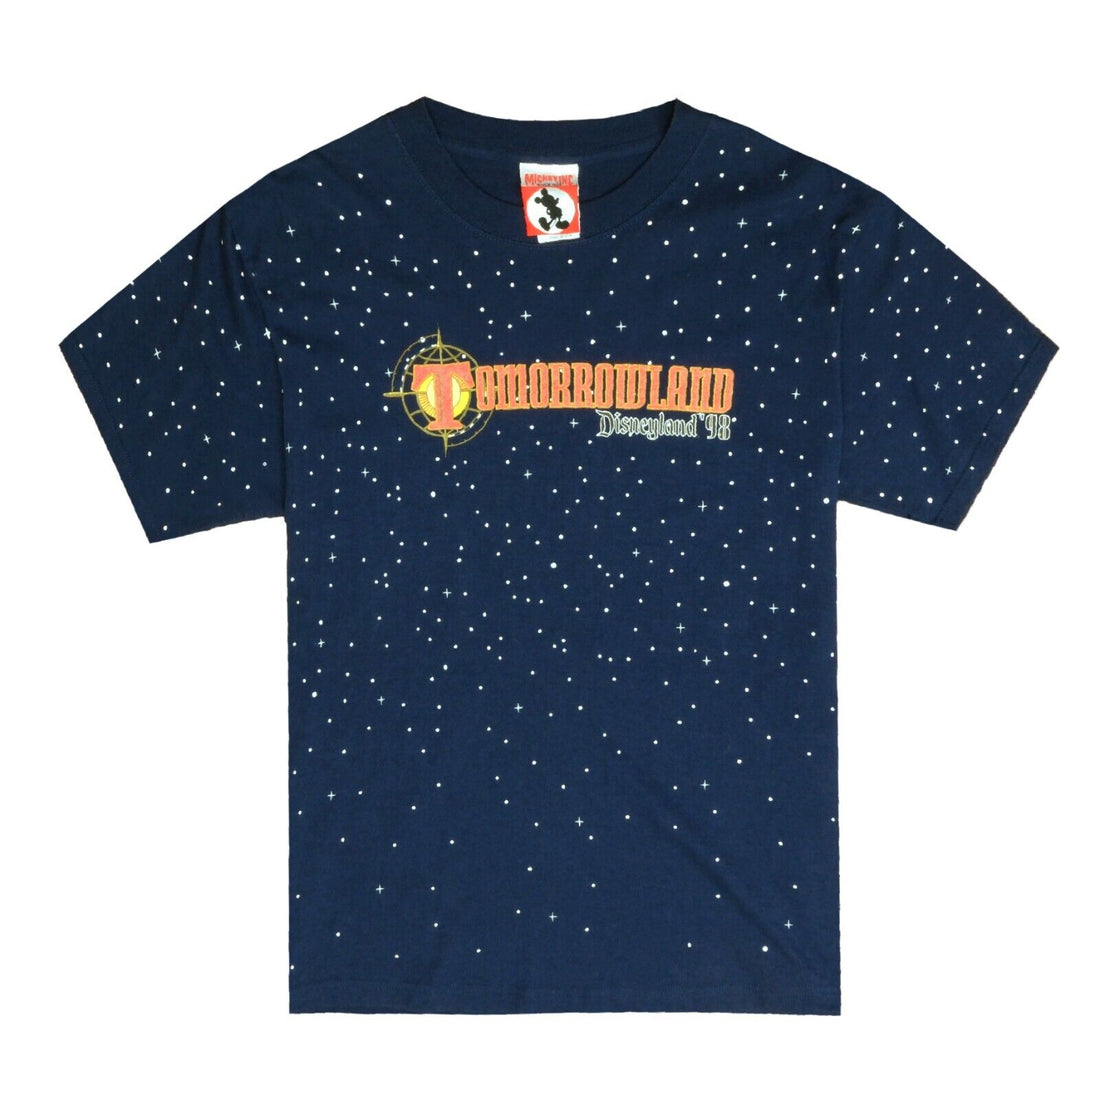 Vintage Tomorrowland Disneyland 1998 All Over Print T-Shirt Size Large Blue 90s